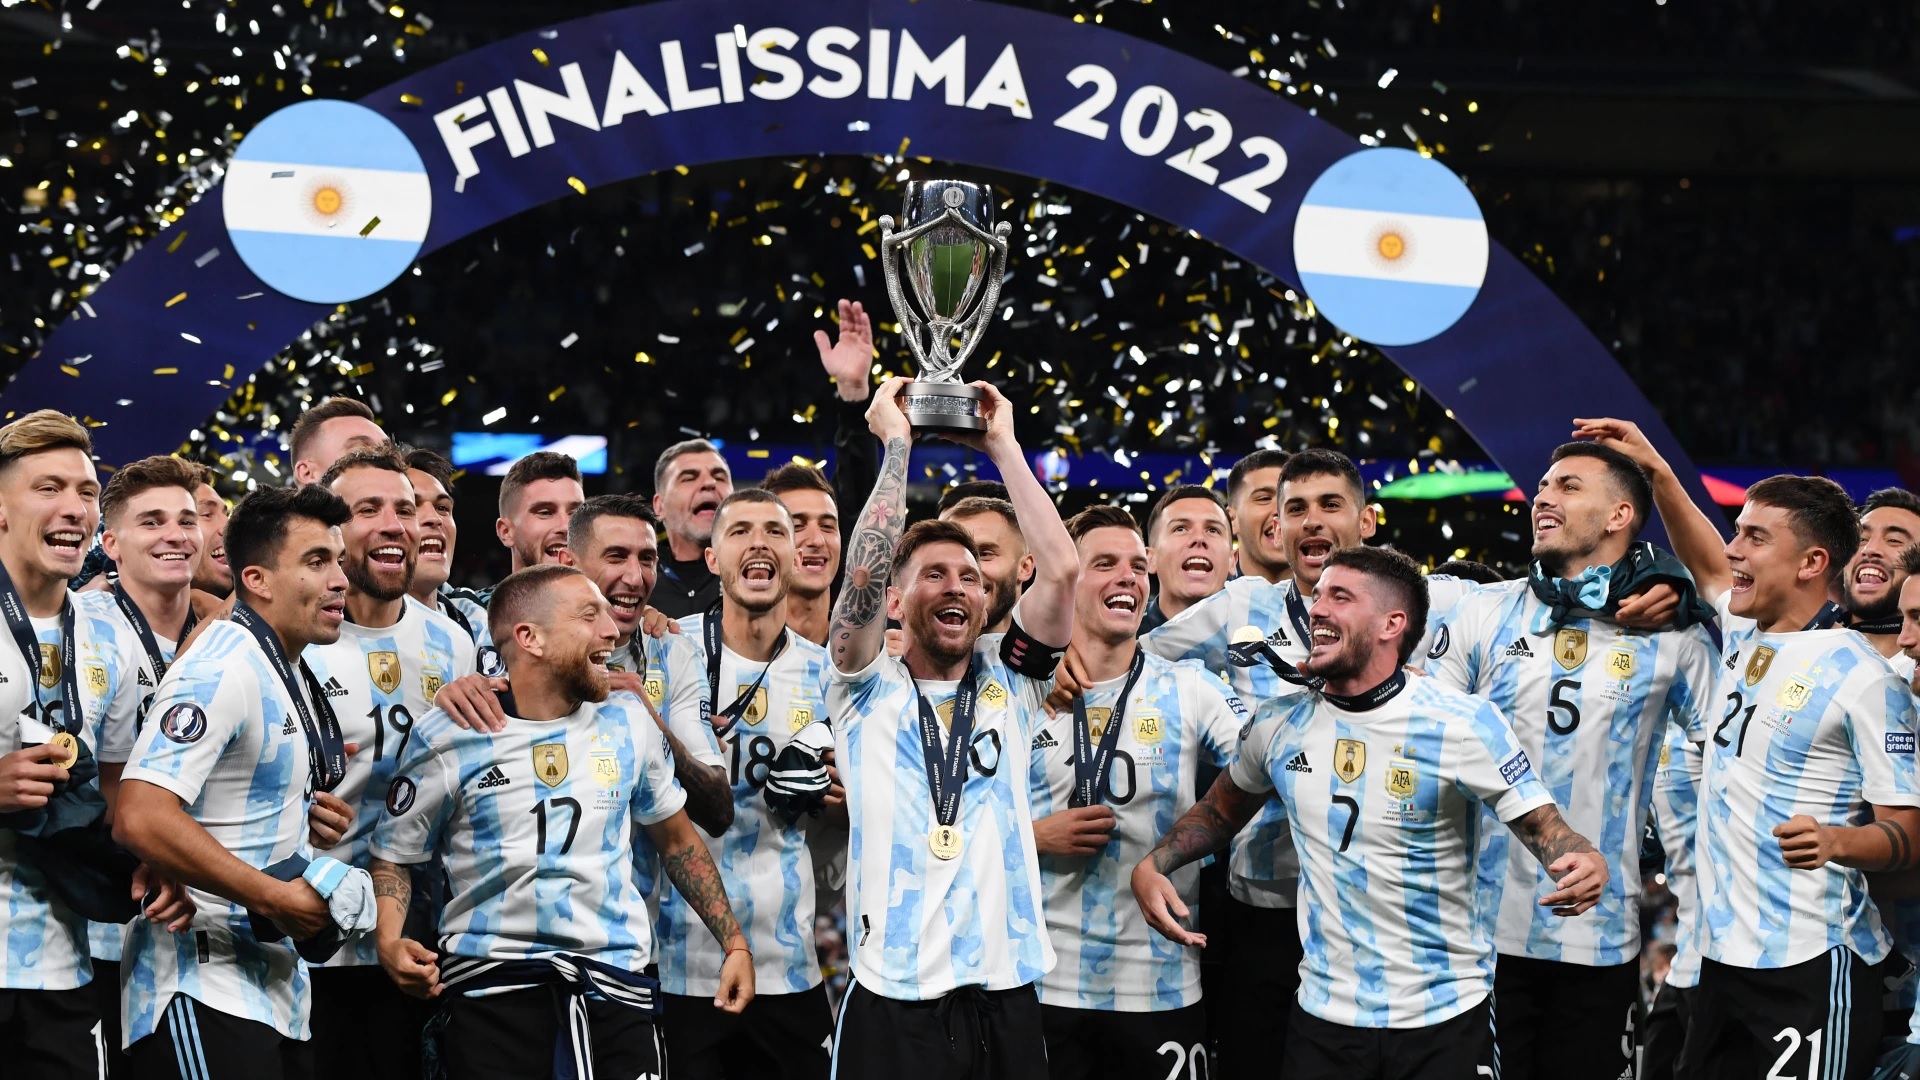  Mundial: Argentina se proclama campeona del mundo tras vencer a Francia